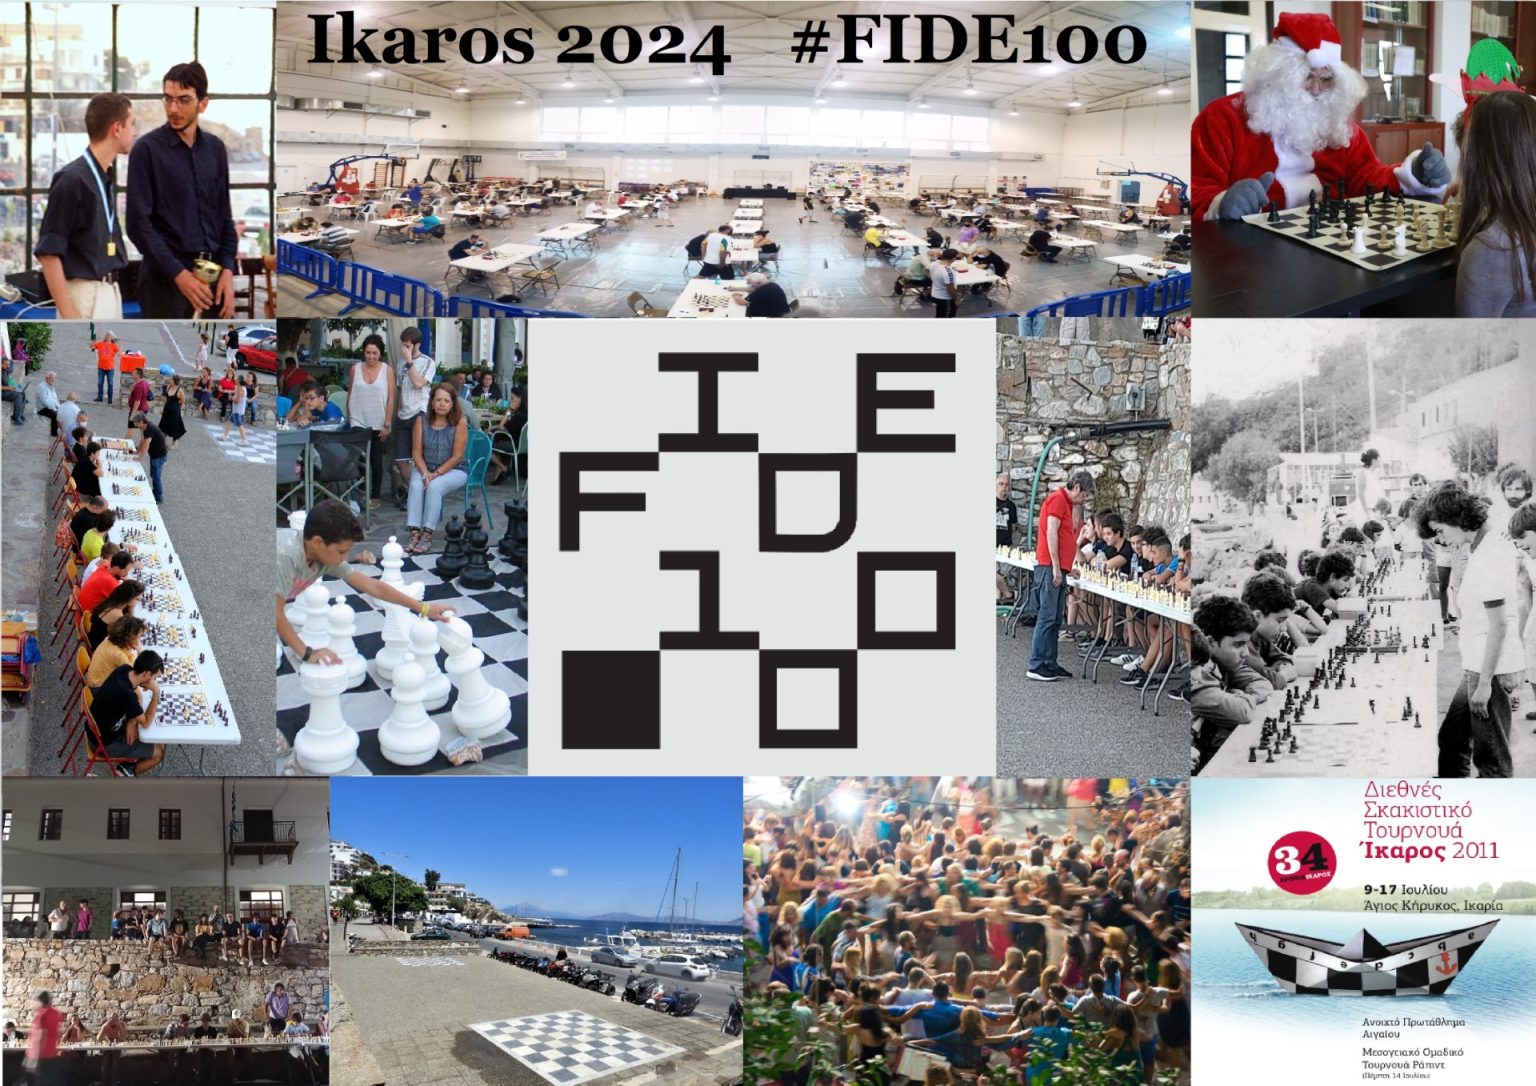 The 47th International Chess Tournament “Ikaros 2024” FIDE 100 Years